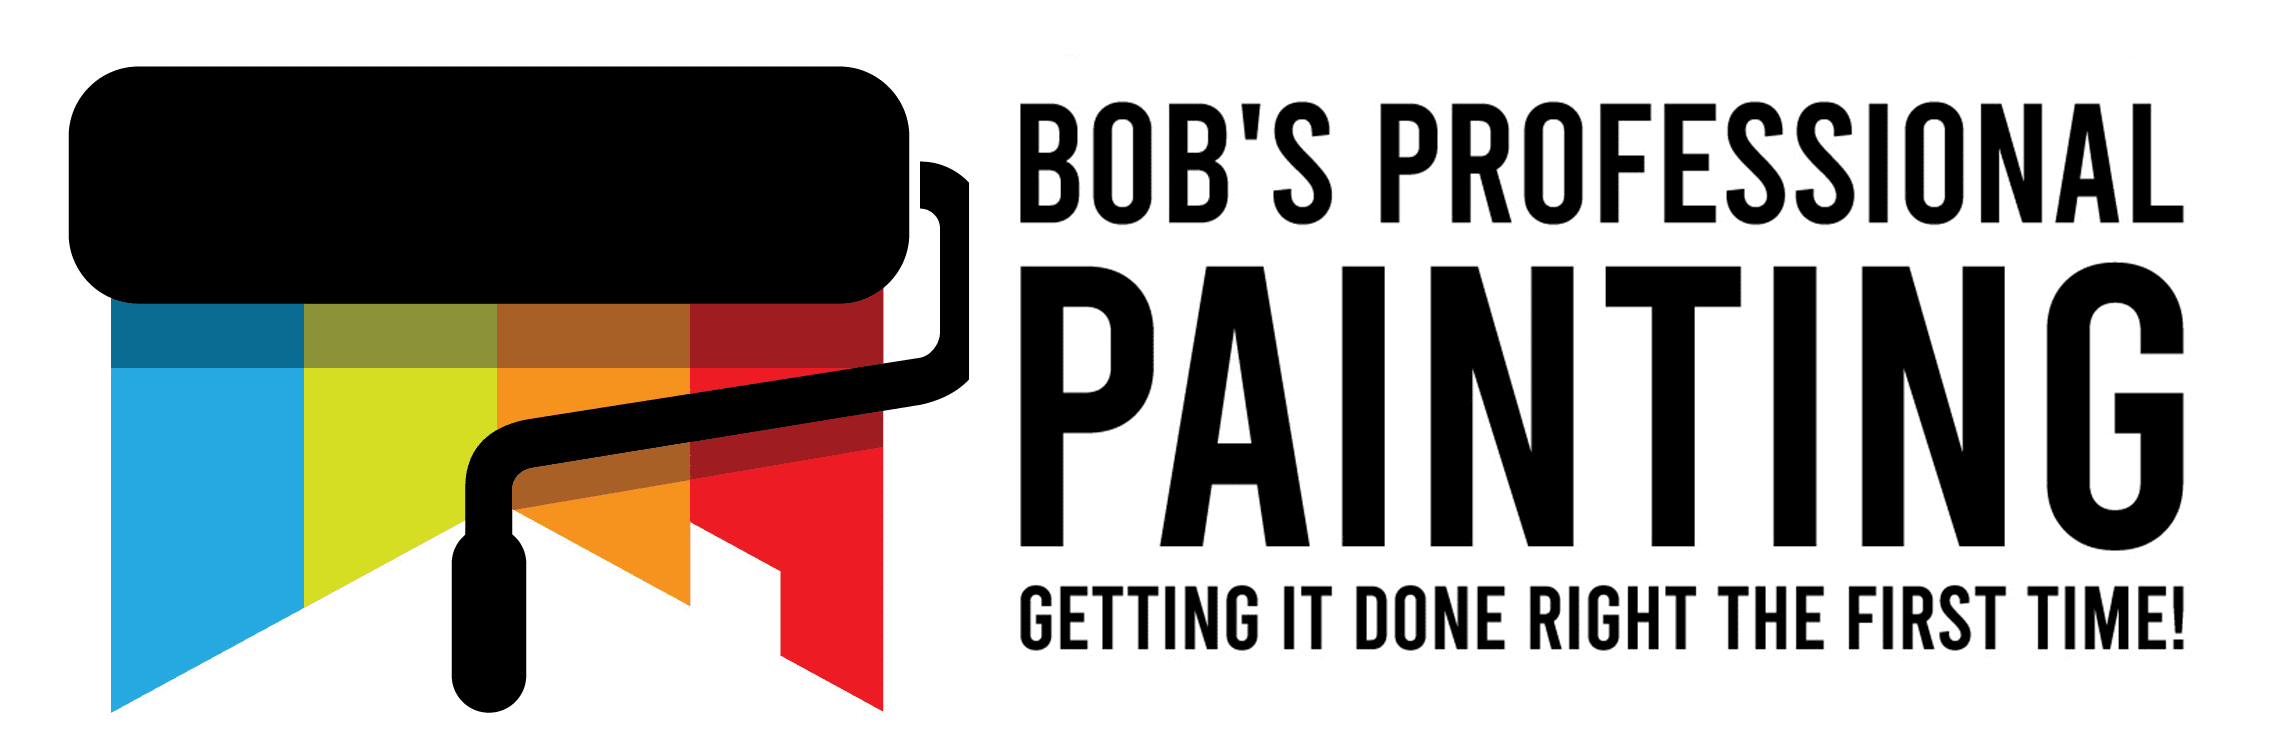 Bob's Professional Painting